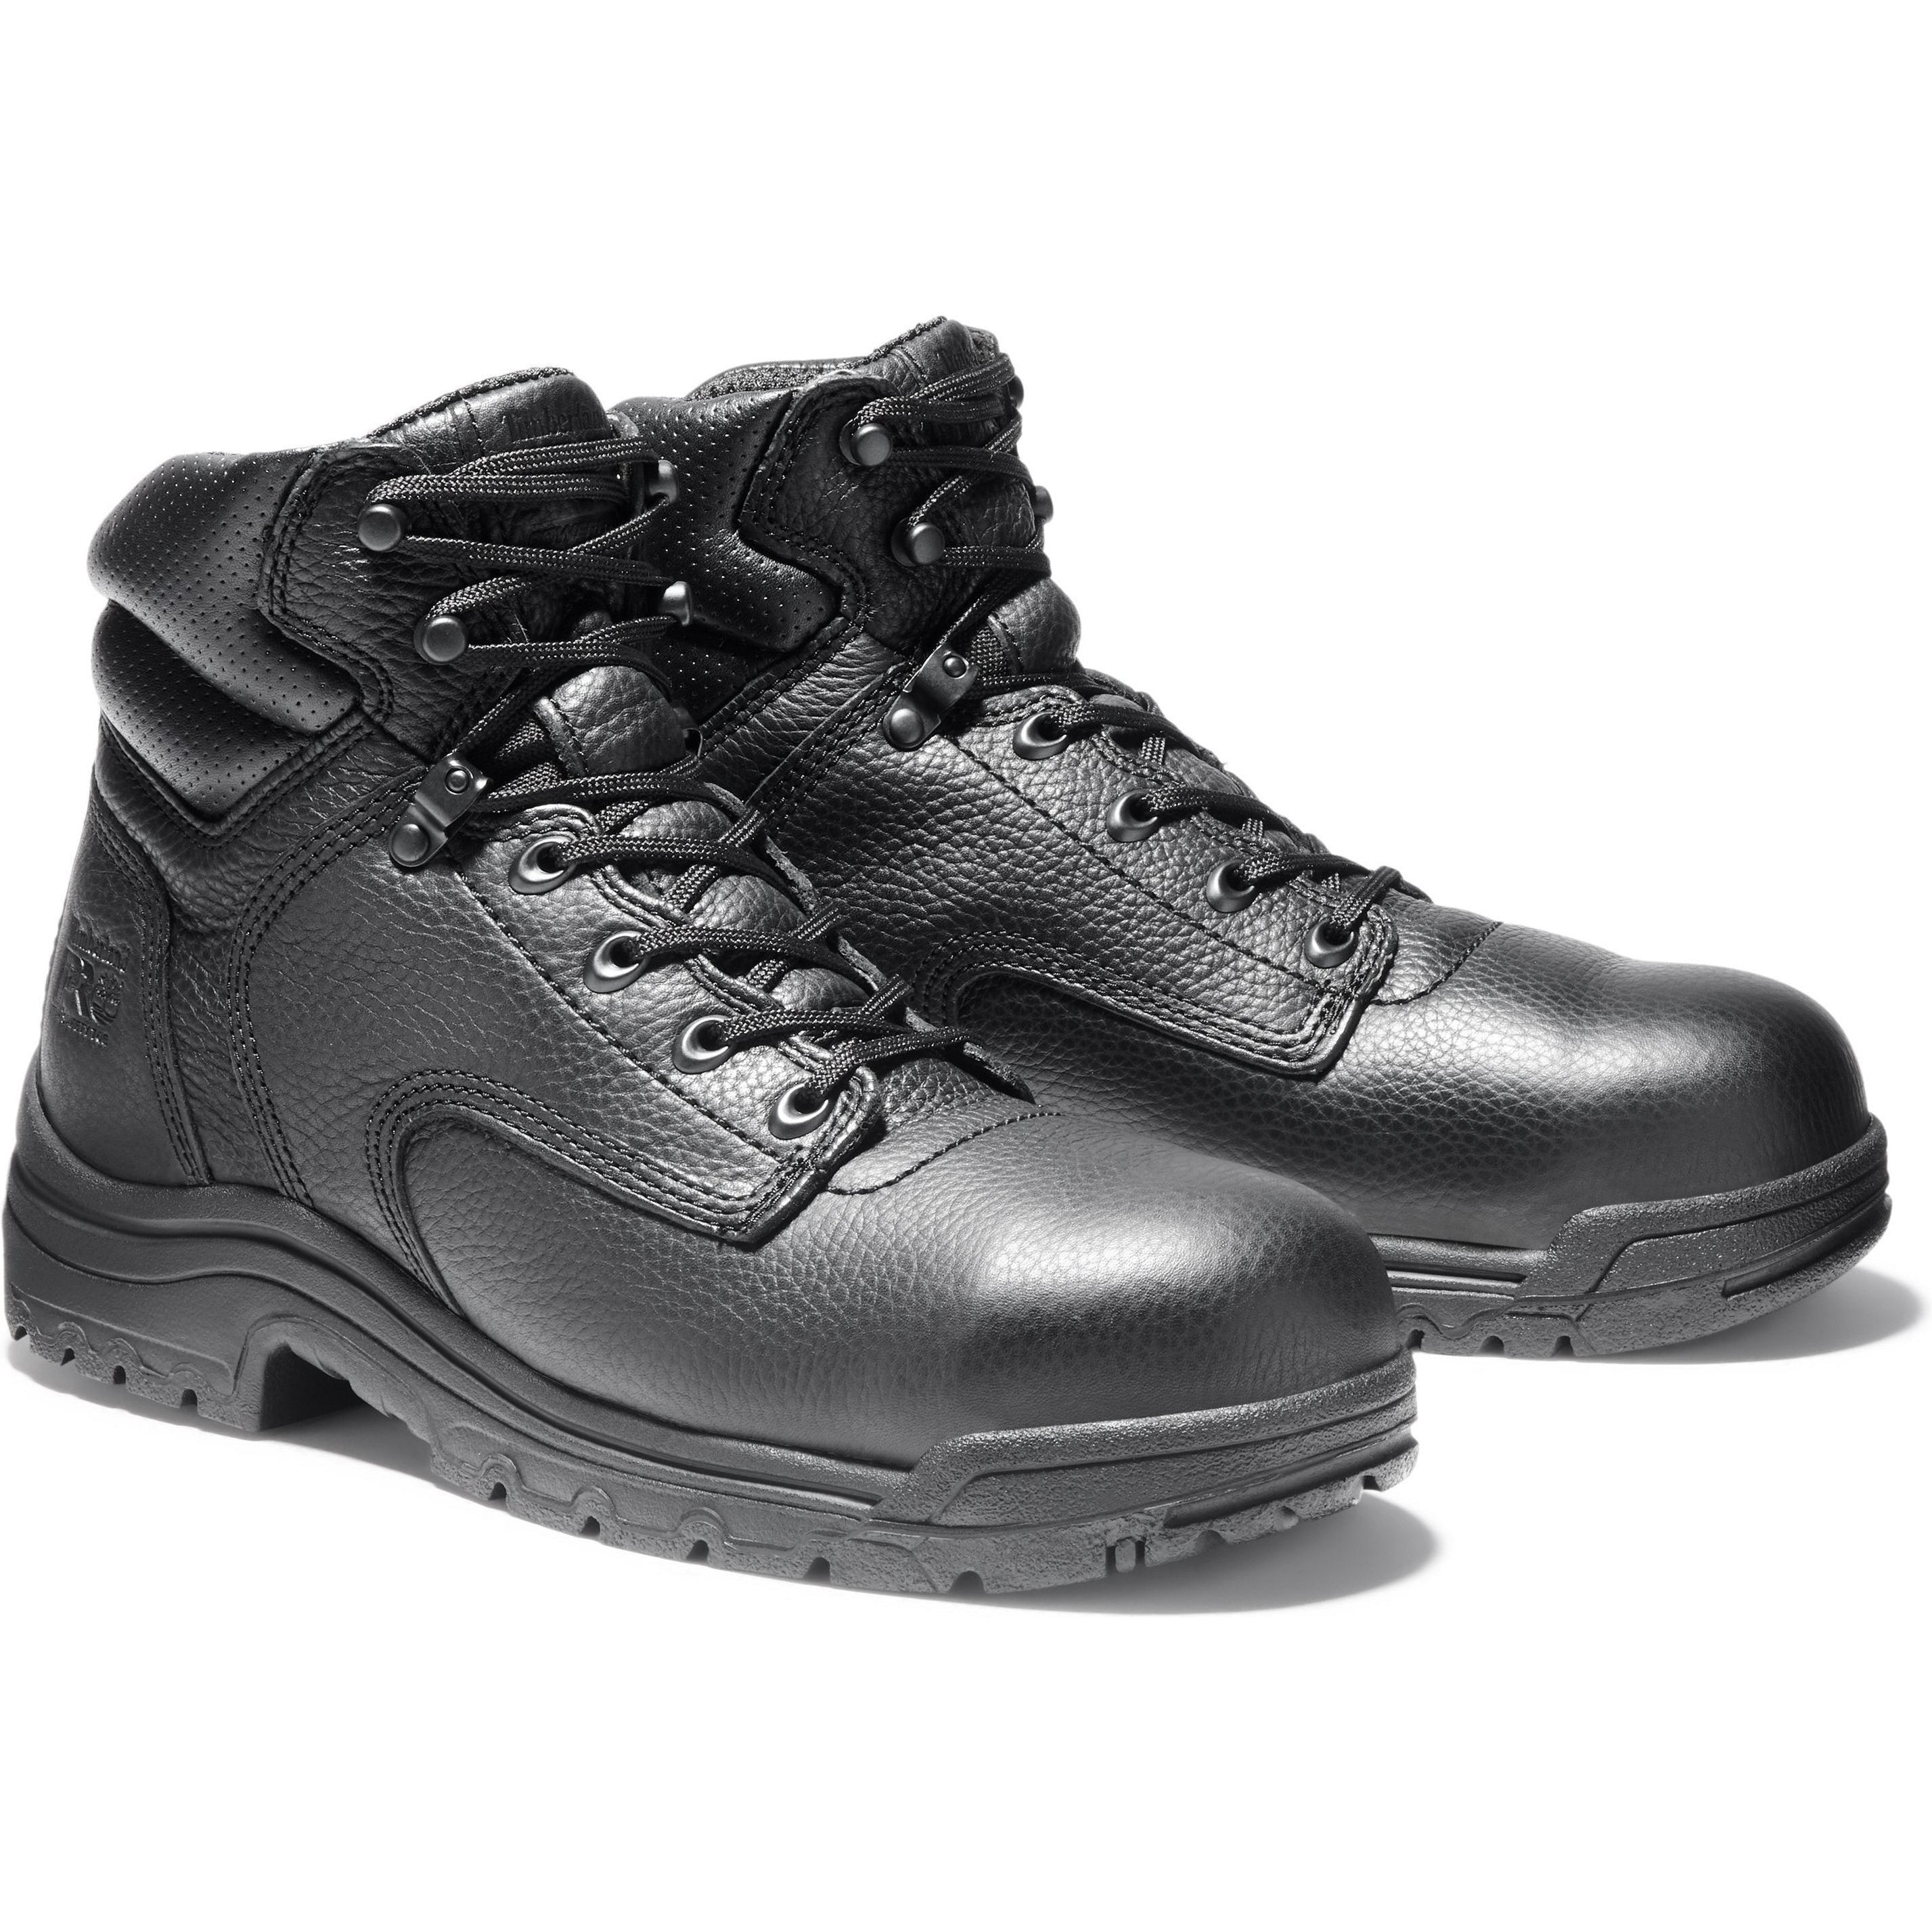 Timberland PRO Men's TiTAN 6" Alloy Toe Work Boot - Black- TB026064001 7 / Medium / Black - Overlook Boots